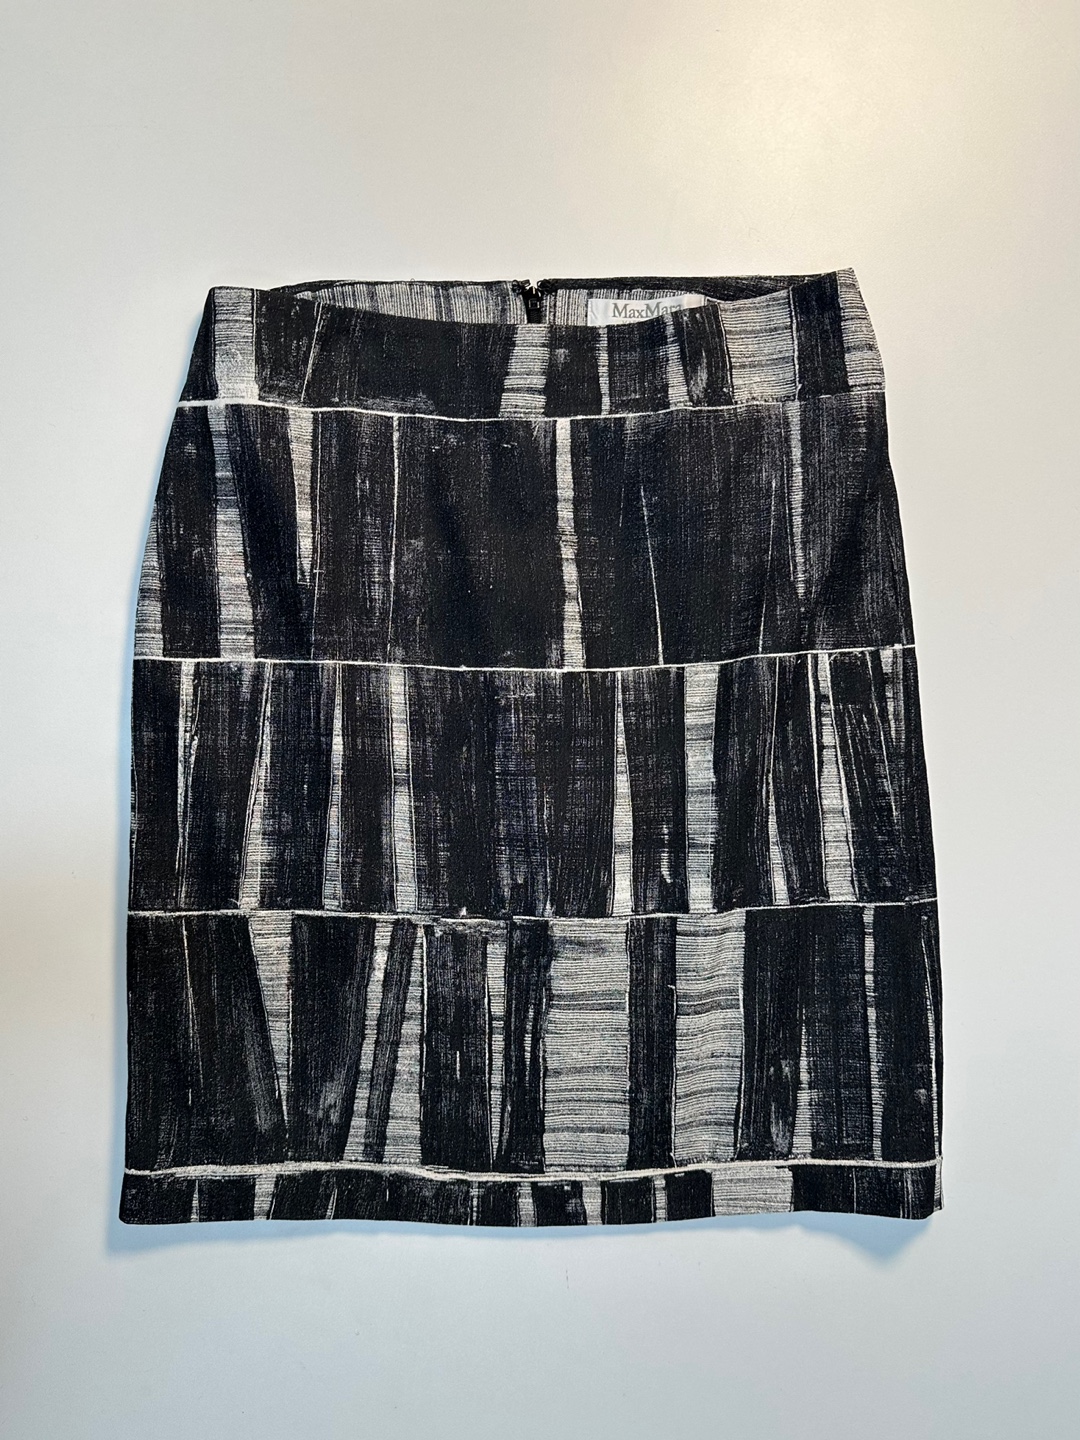 Max Mara Gray Scratch Brick Pattern Skirt (made in italy)